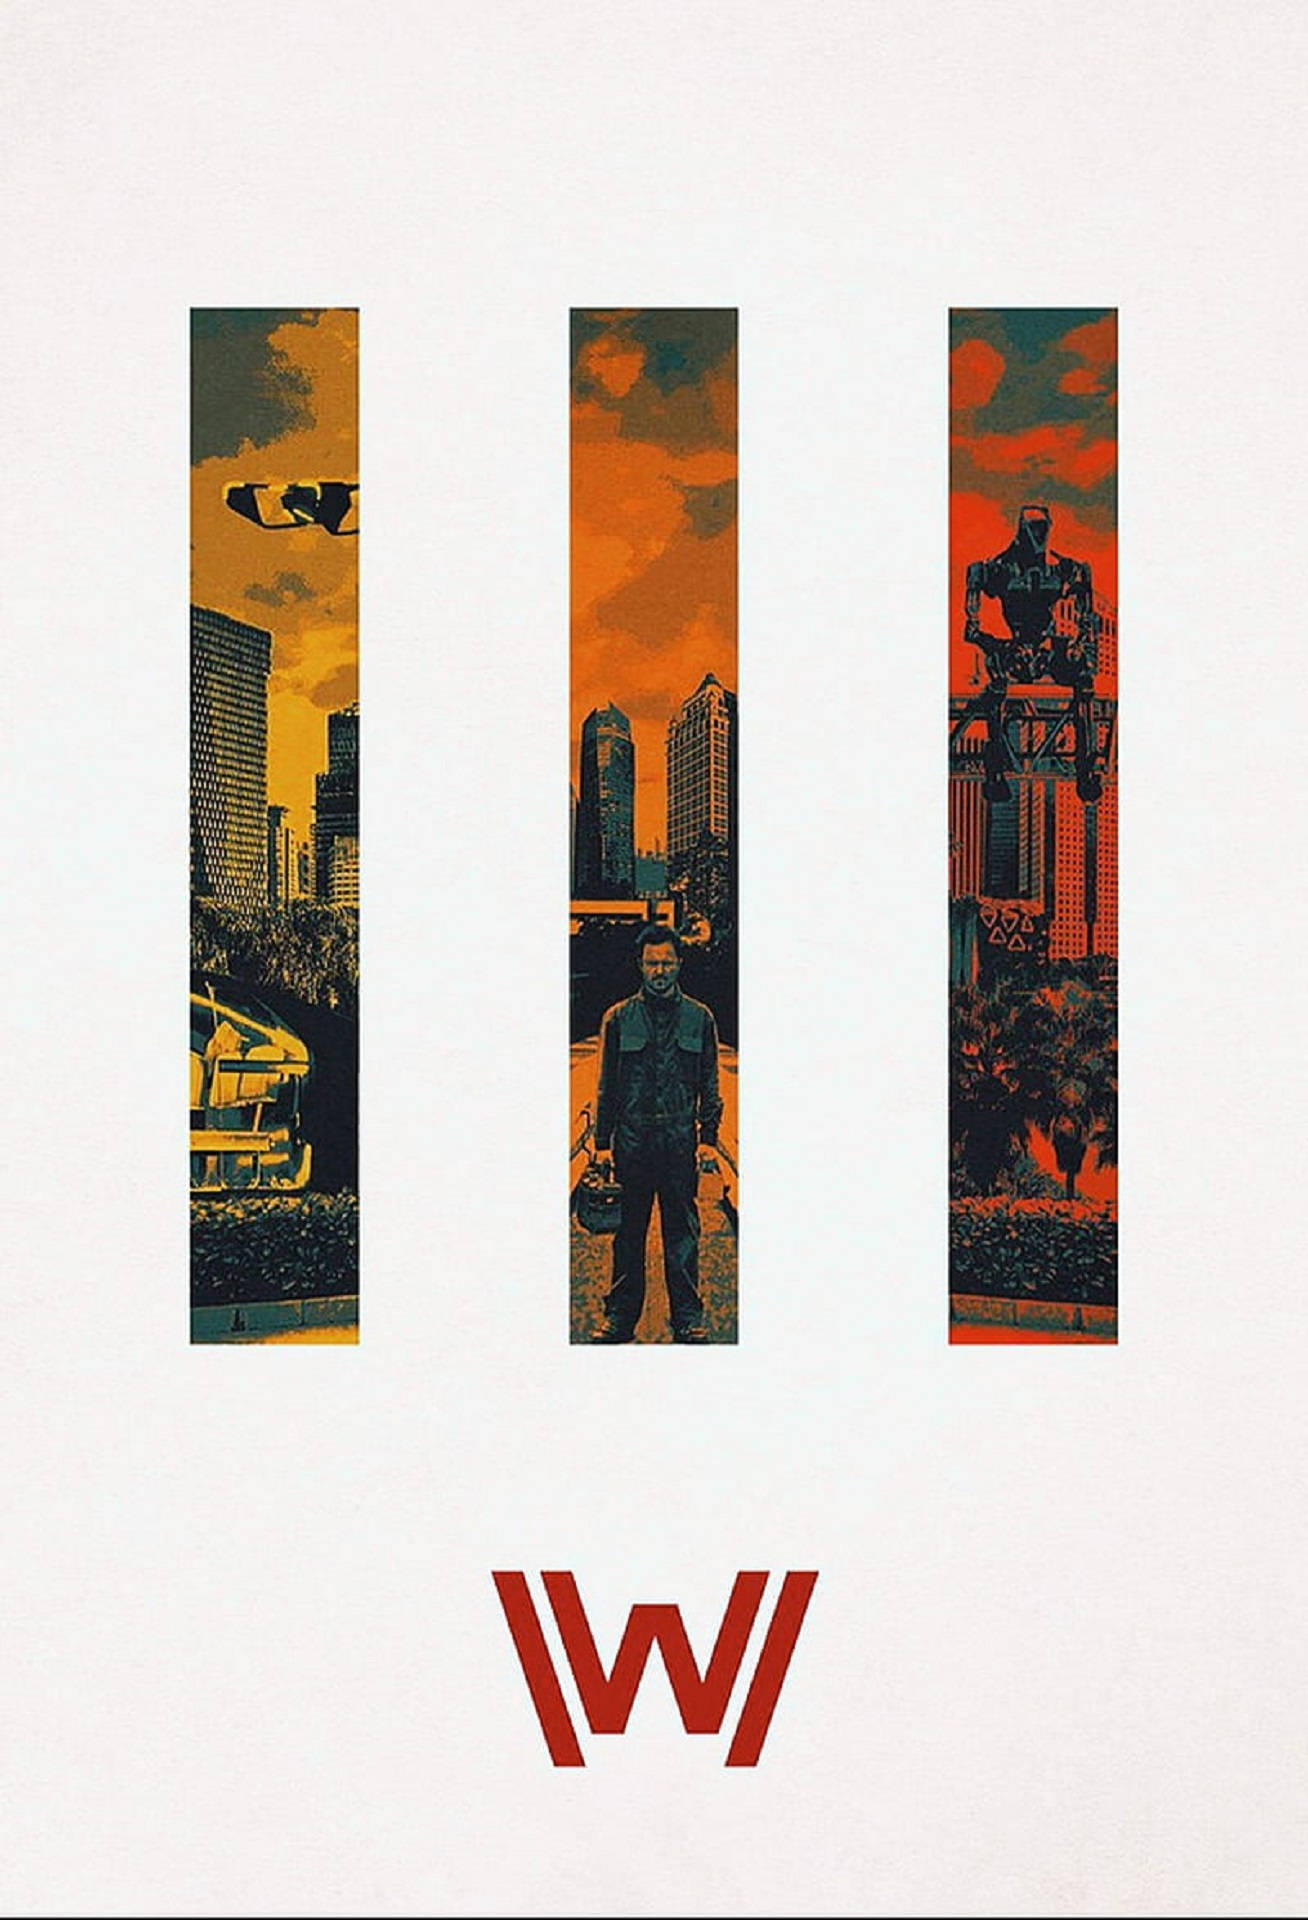 Skådespelarenaaron Paul I En Westworld-banner. Wallpaper